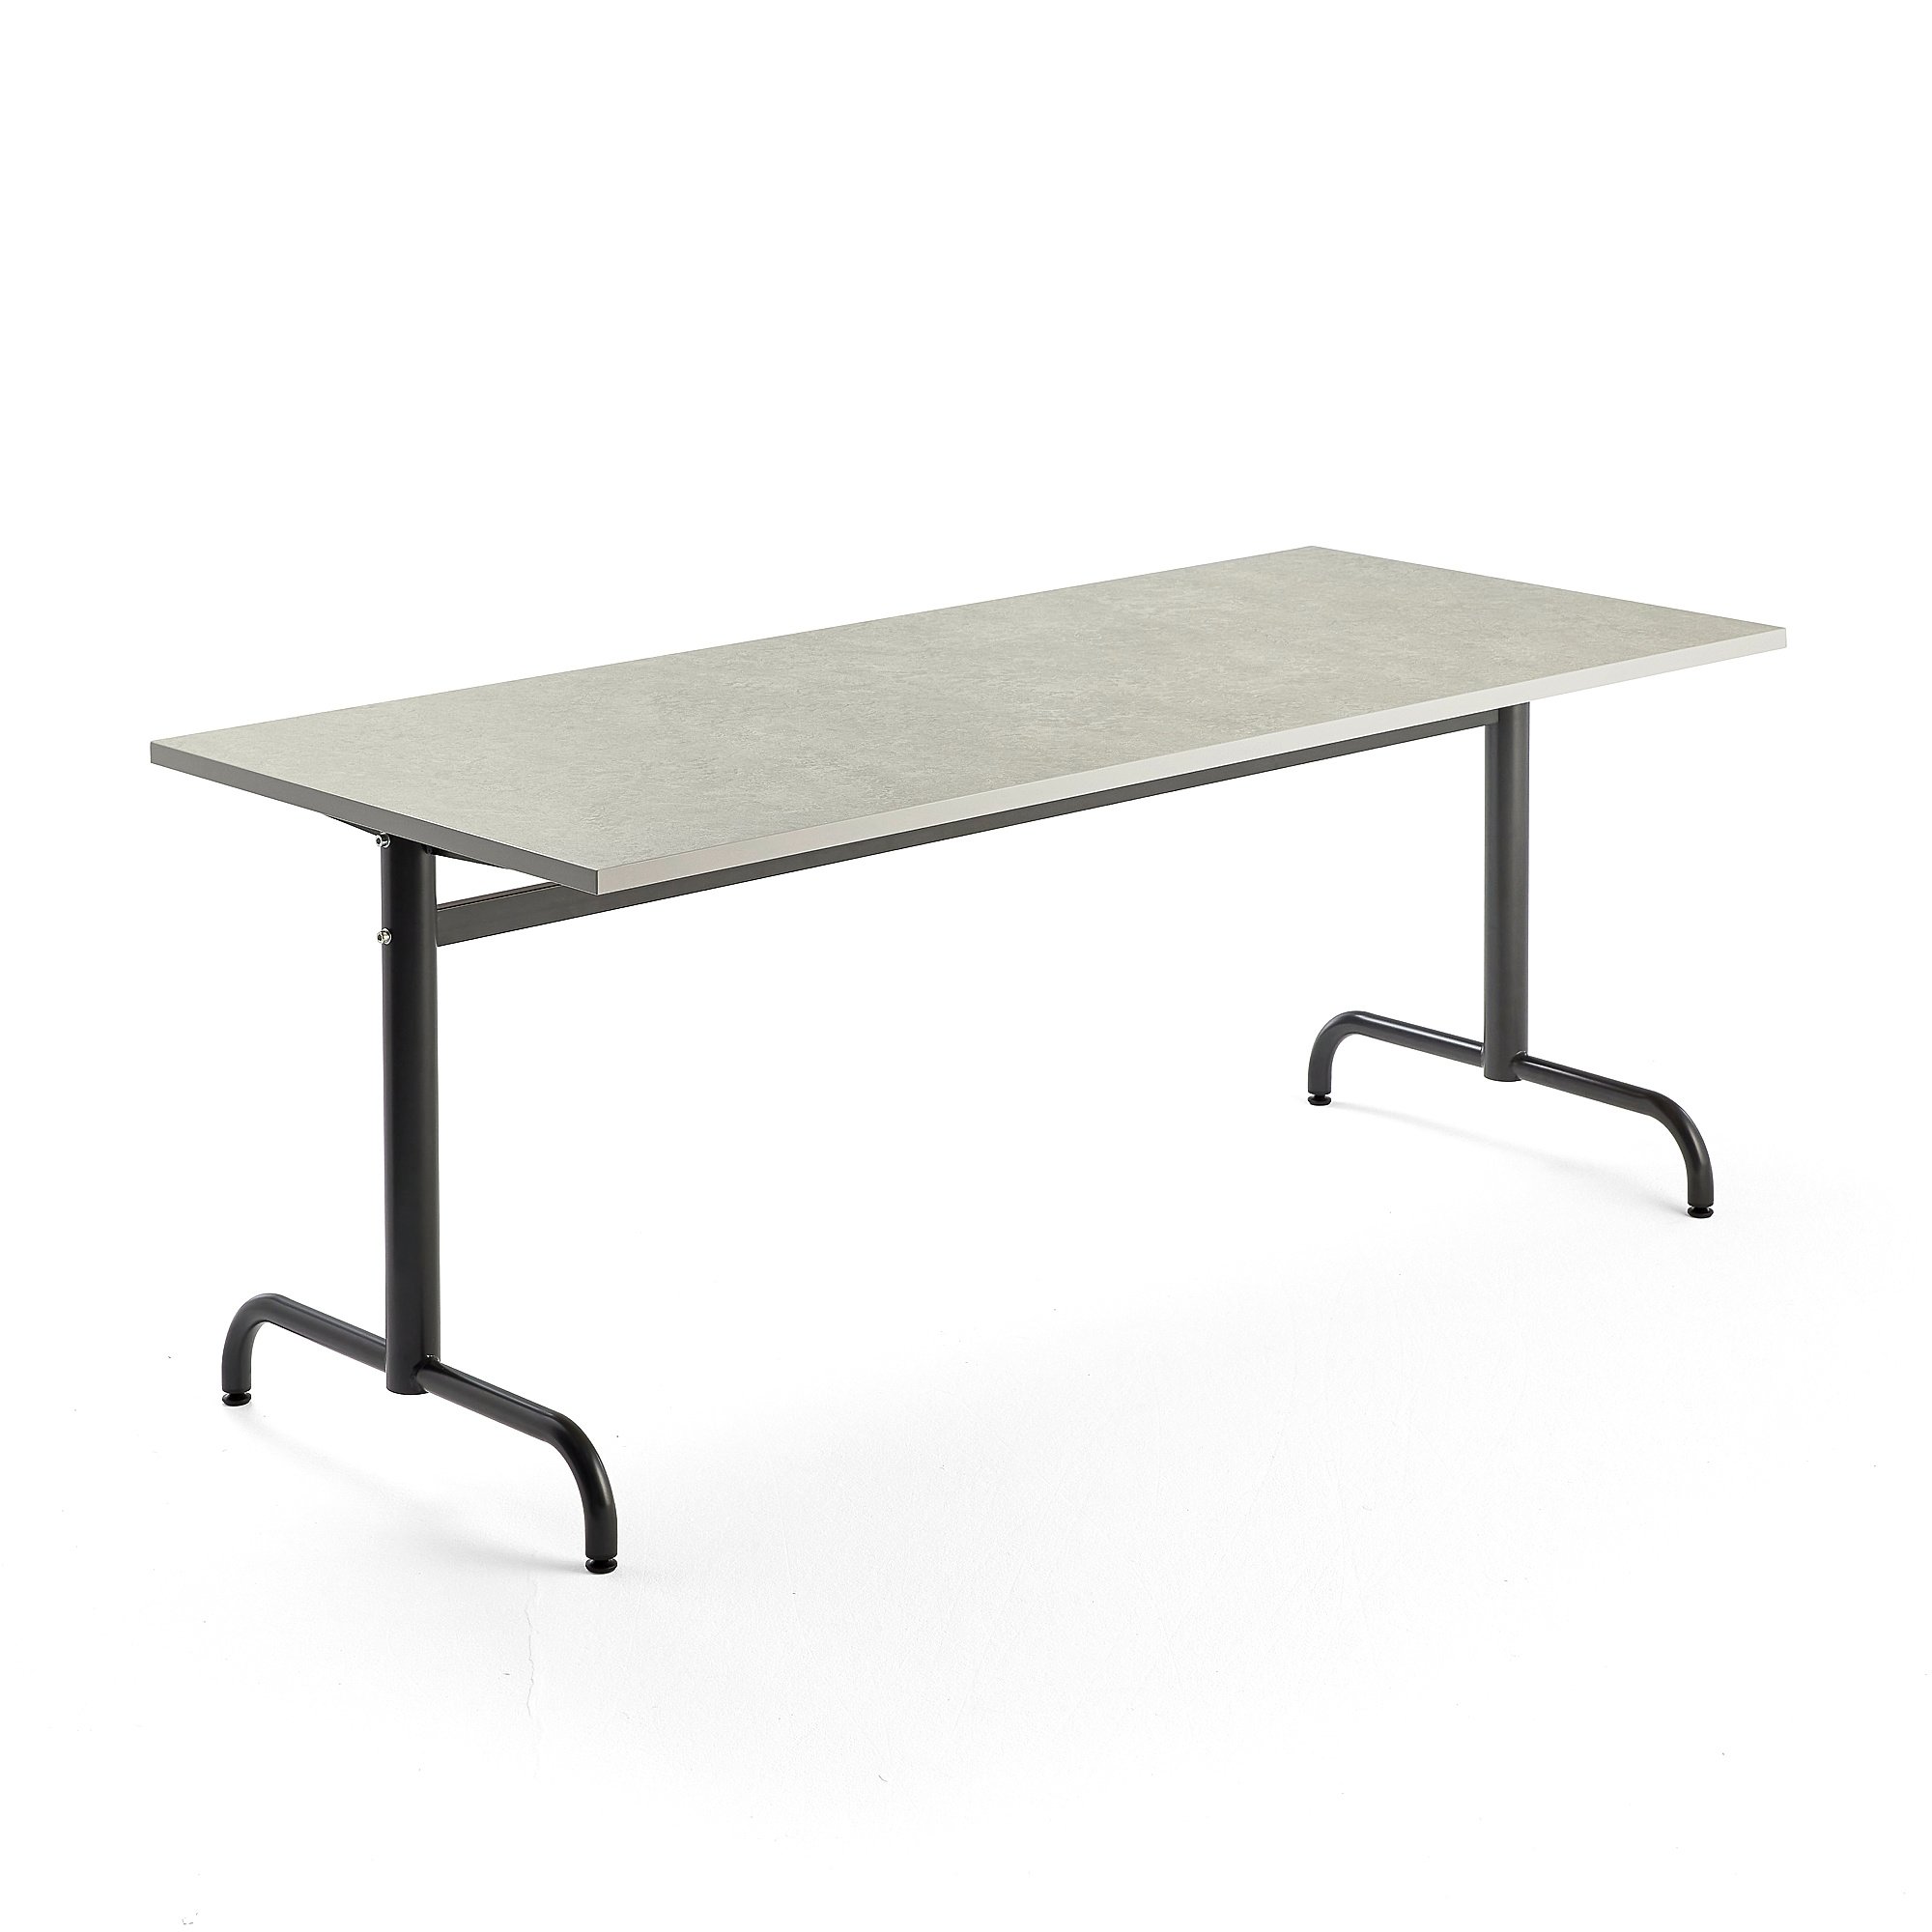 Stůl PLURAL, 1800x800x720 mm, linoleum, šedá, antracitově šedá